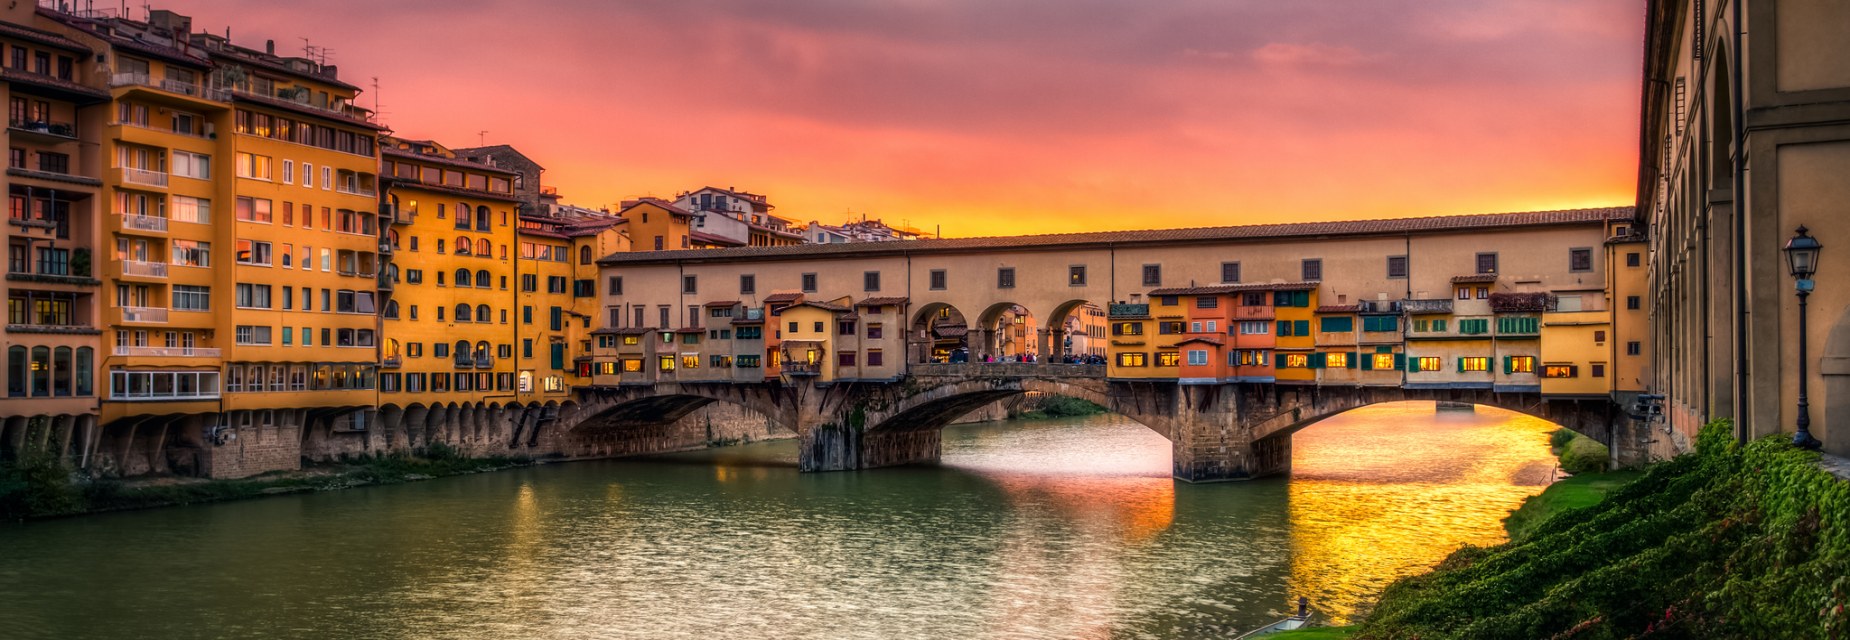 Ponte Vecchio #20